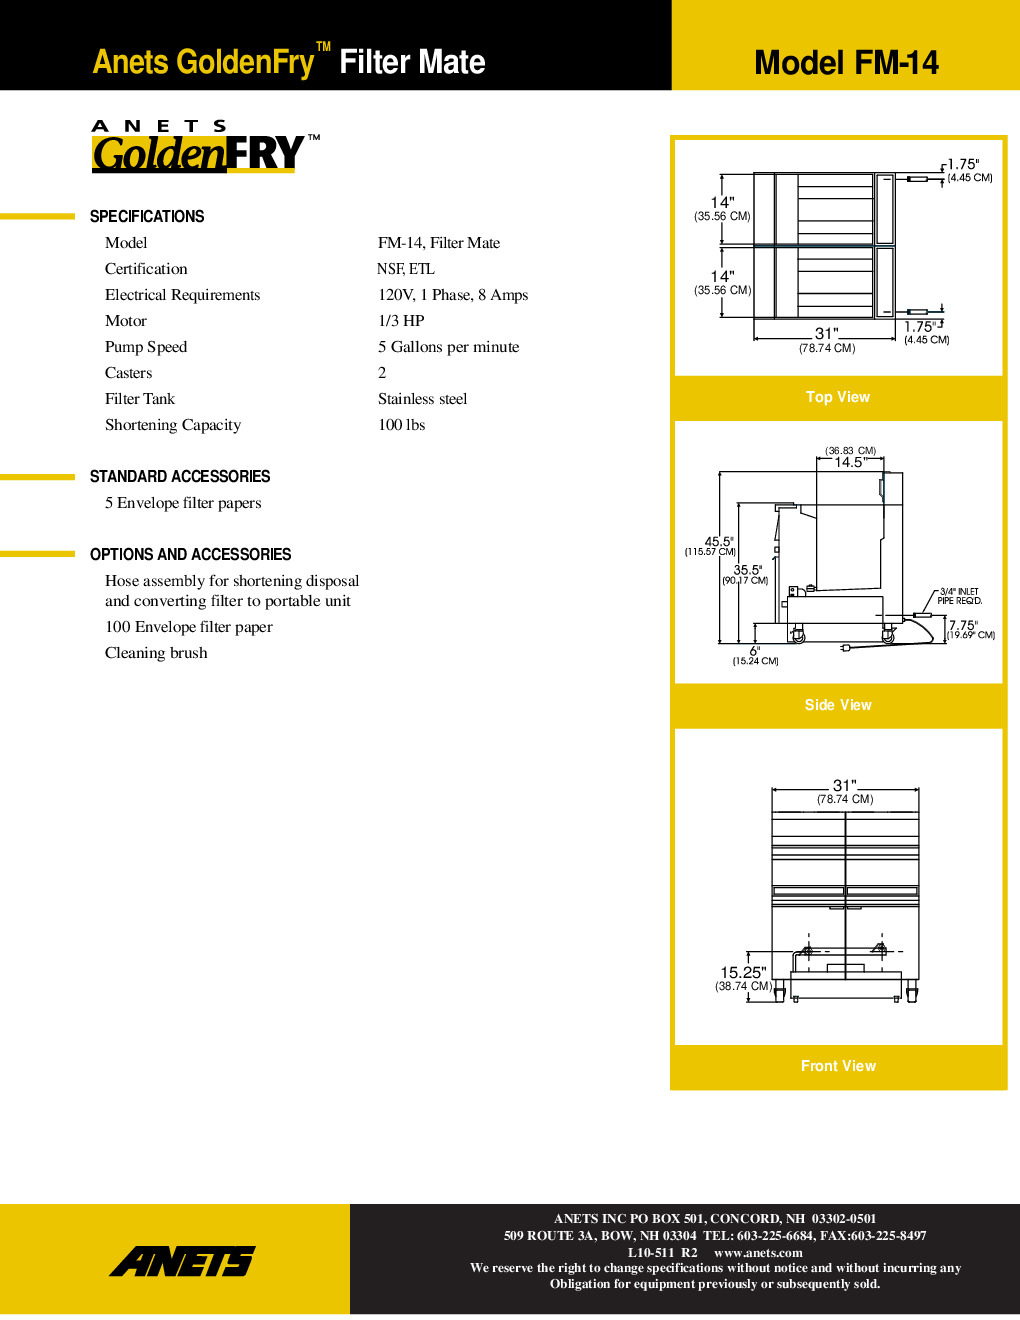 ANETS FM-14-2 Built-In Fryer Filter Drawer Design w/ 100-Lb Capacity, Filter Starter Kit, 5 GPM